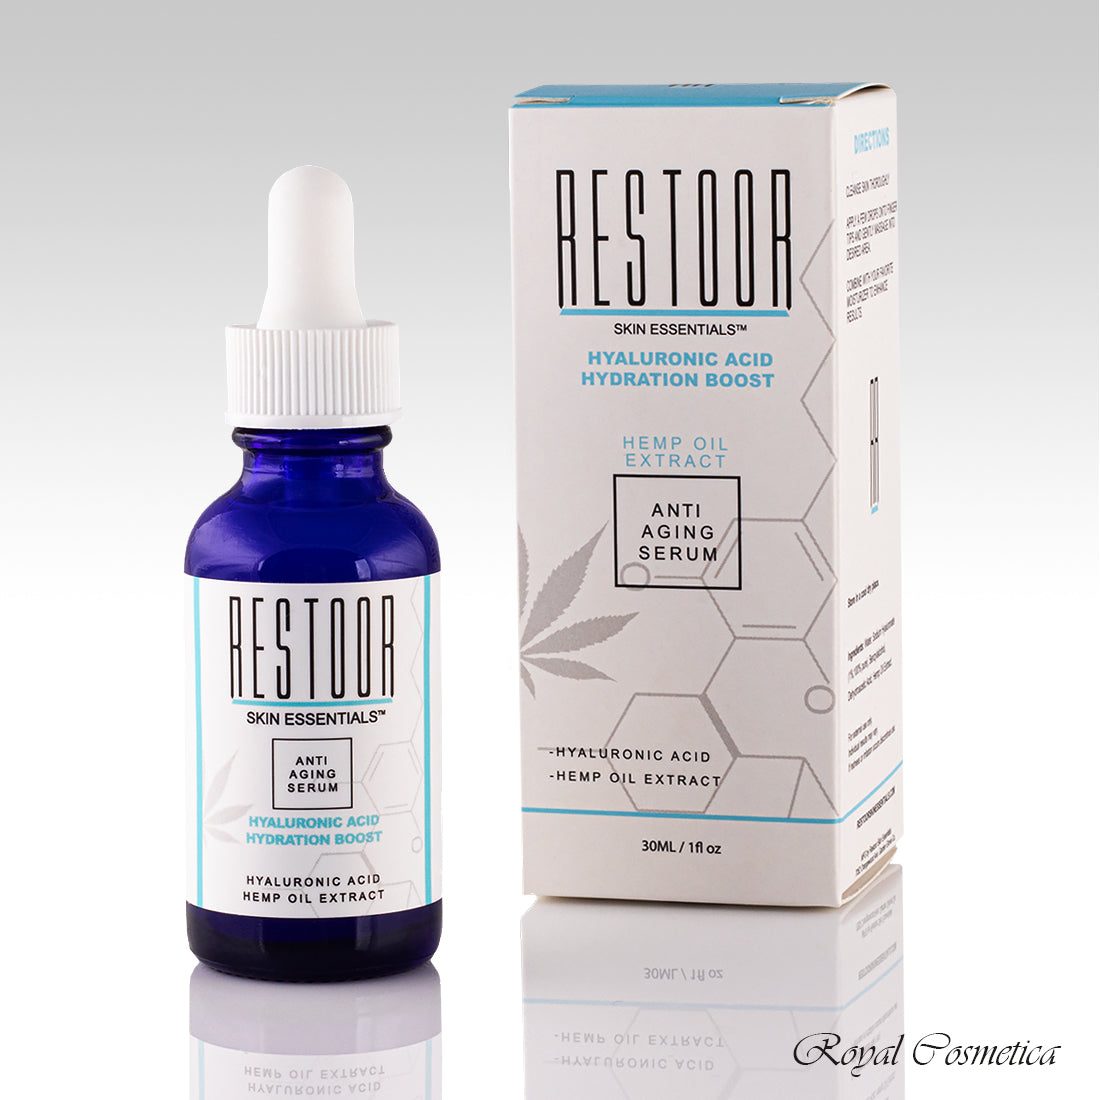 RESTOOR Anti Aging Serum Hydration Boost